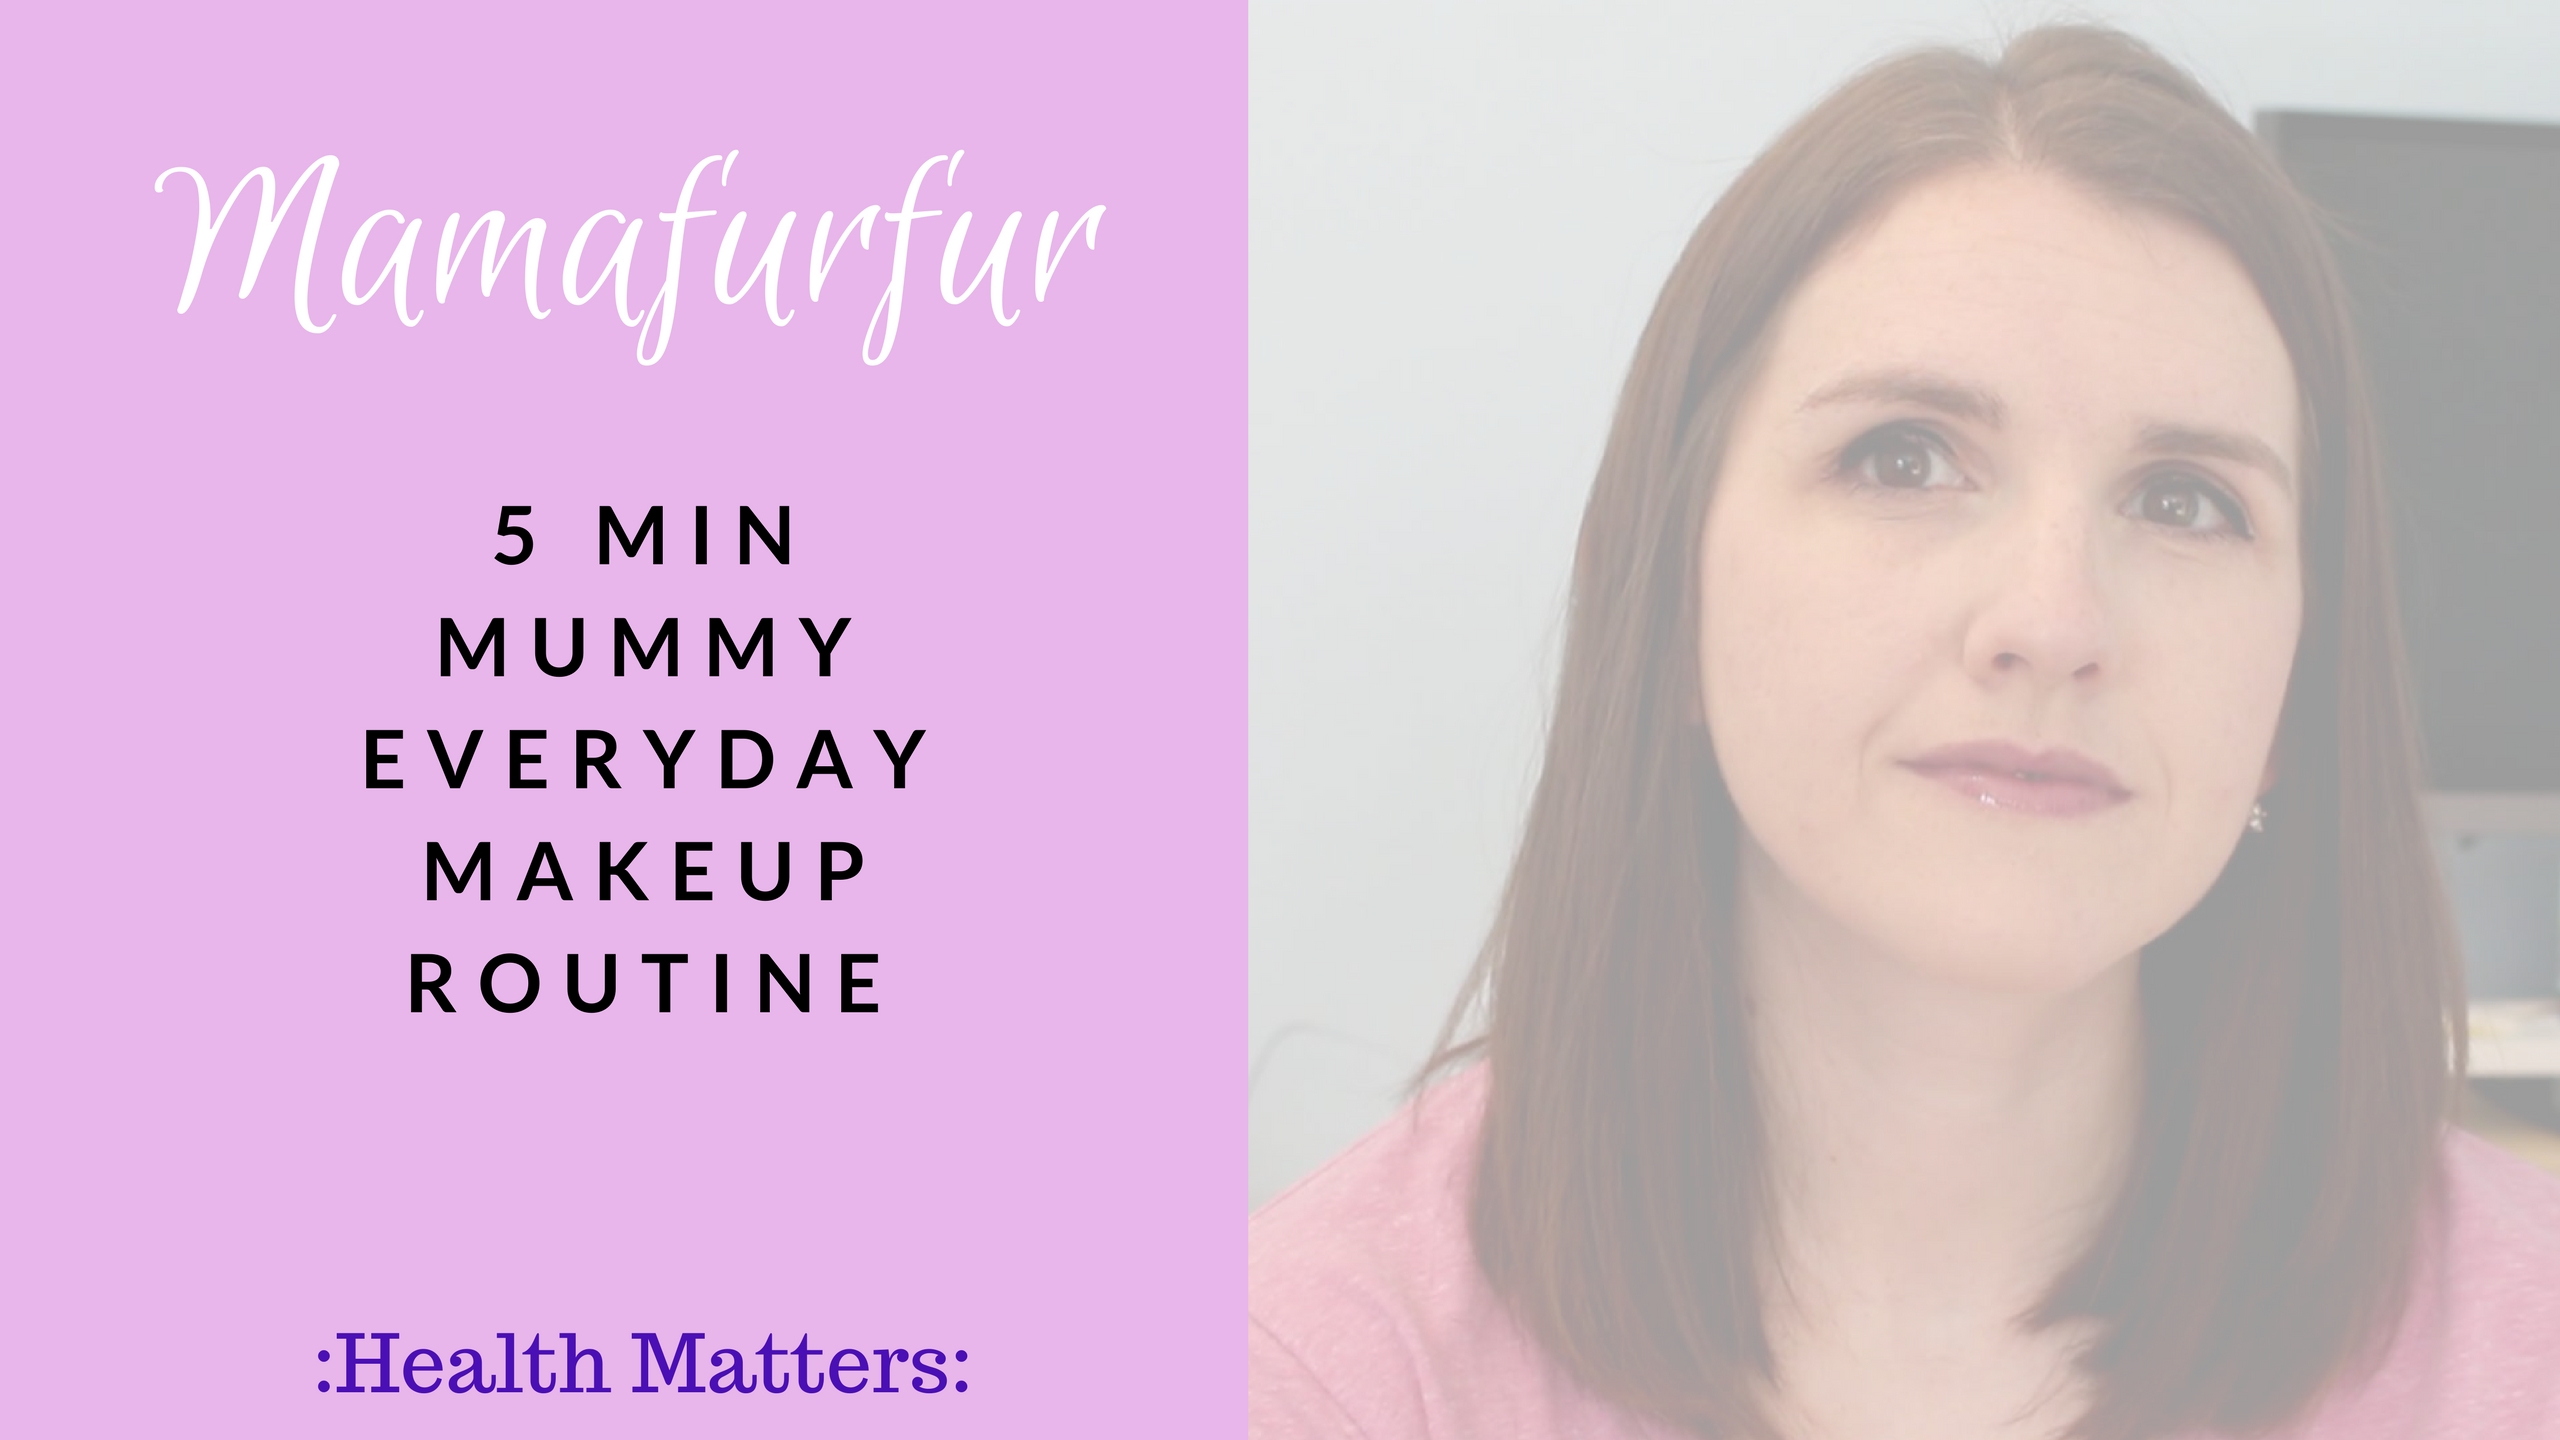 5 Min Mummy Everyday Makeup Routine ¦ Mamafurfur ¦ Beauty Routines